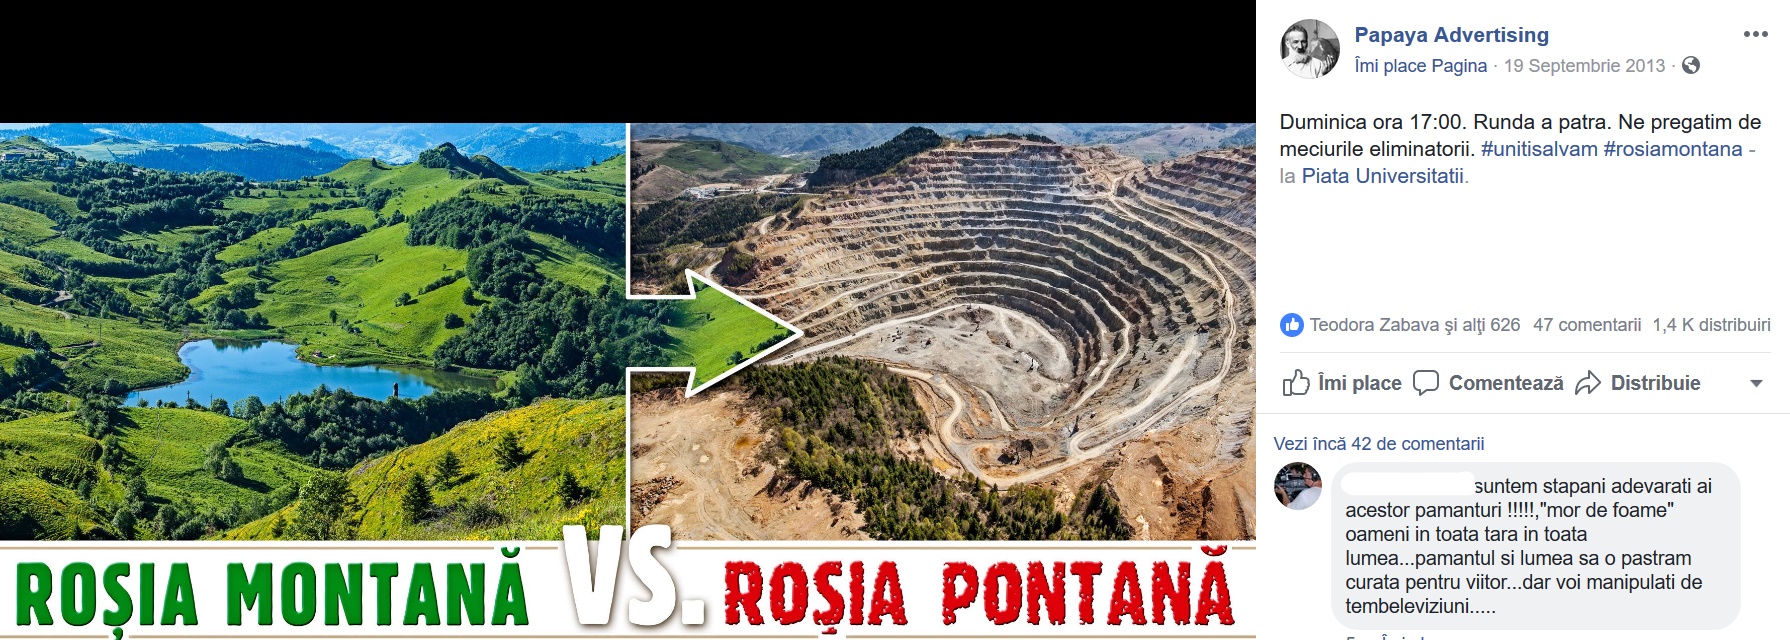 Rosia Montana - proiect minerit